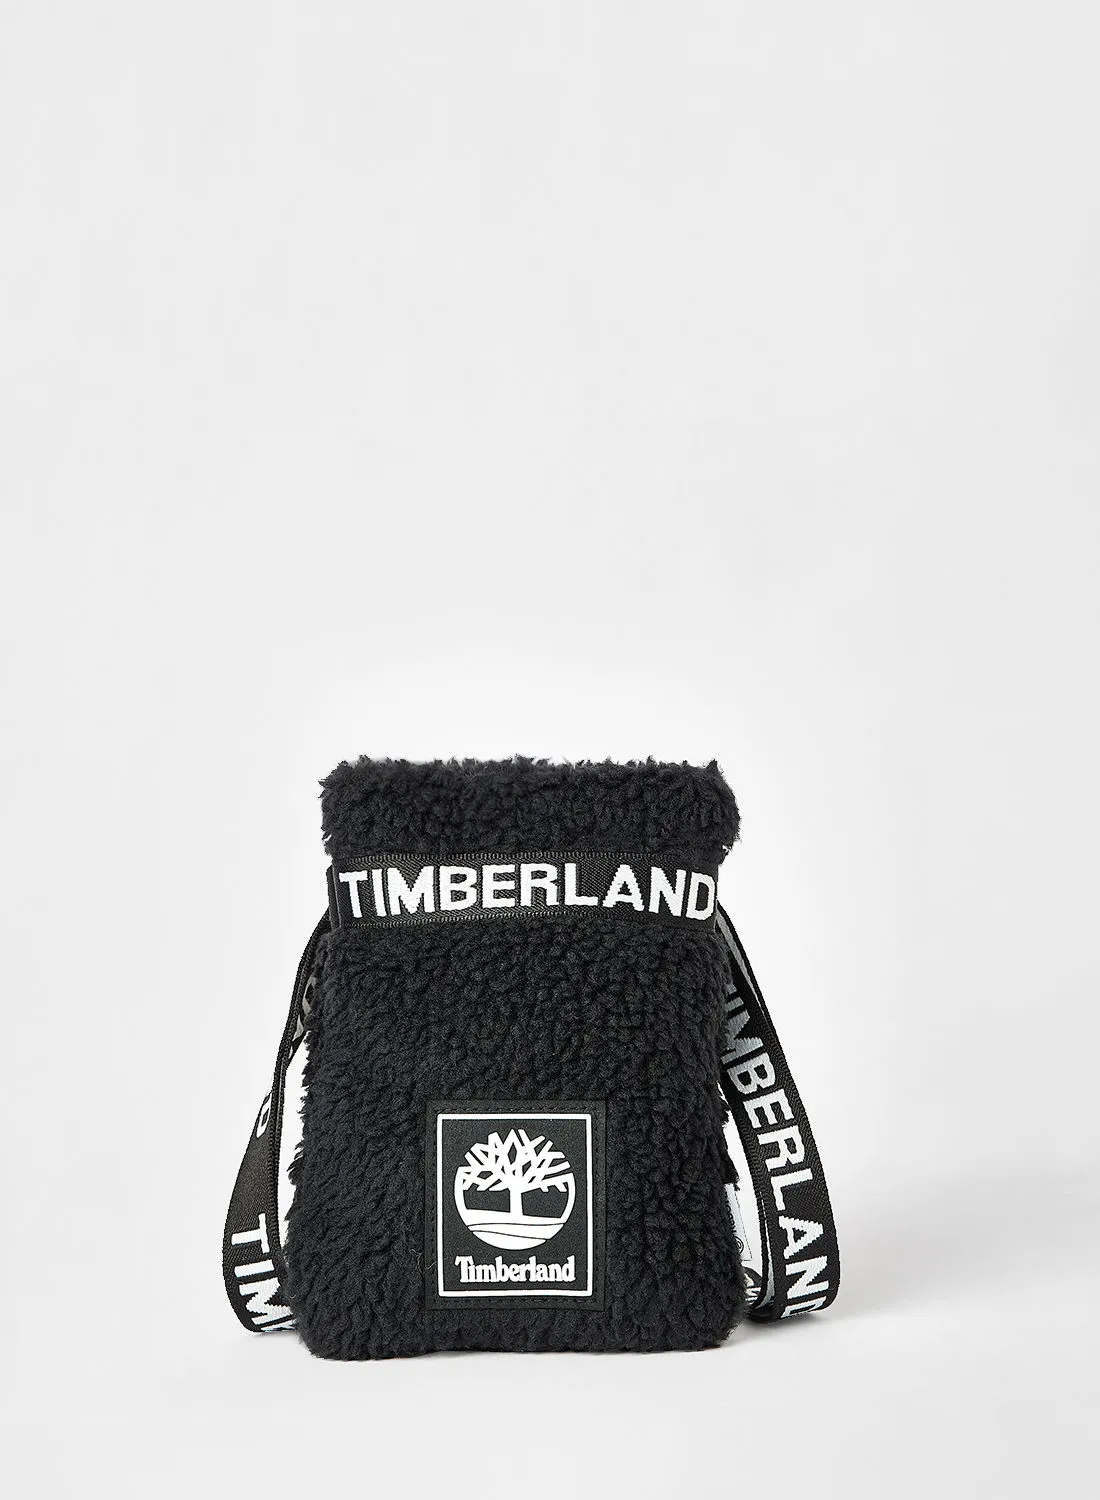 Timberland Starlo Mini Crossbody Bag Black/White